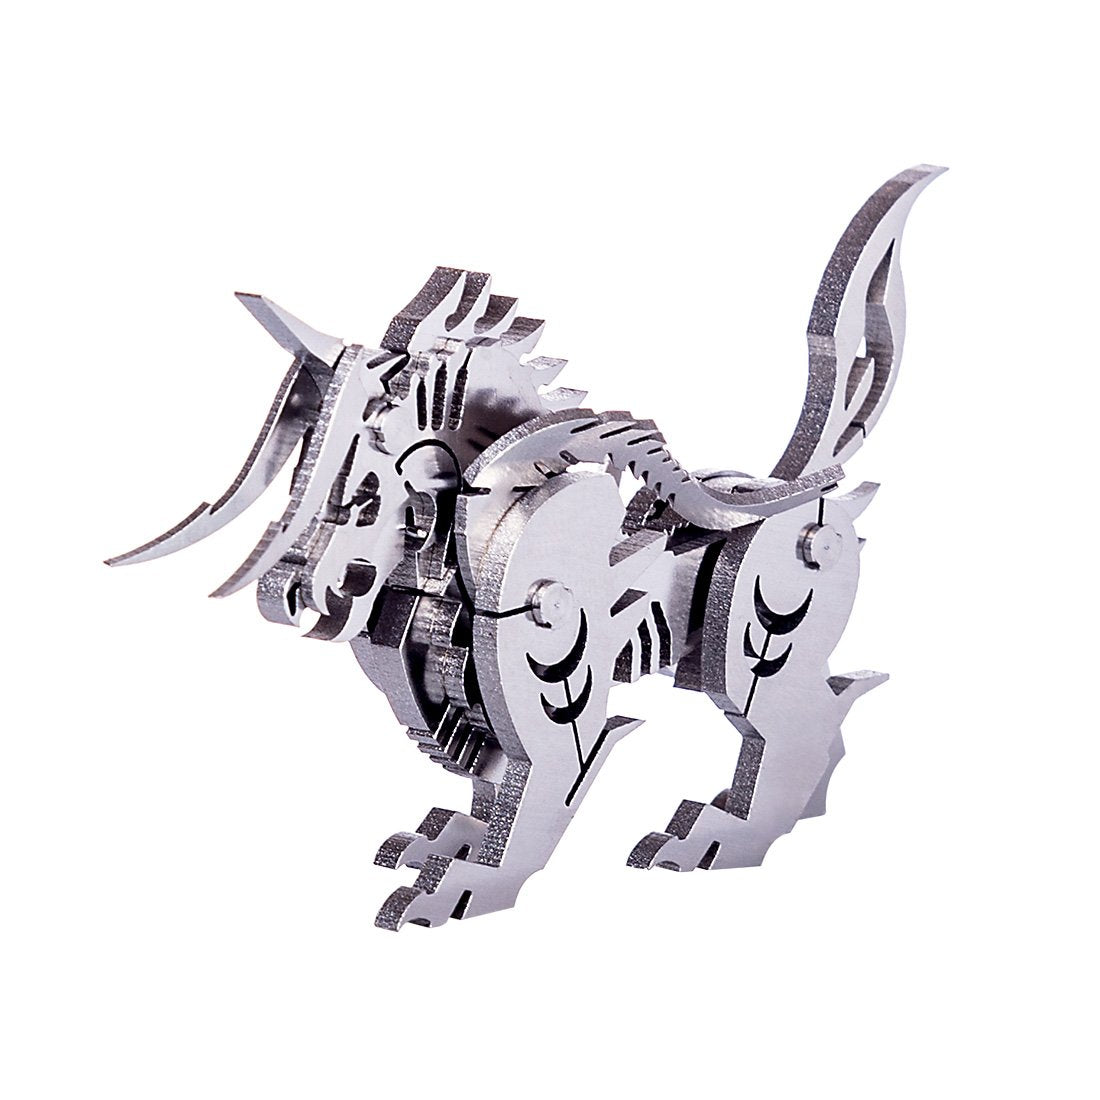 3D DIY Metal Puzzle Assembly Jigsaw Crafts Model Kit - Goat Beast/Unicorn